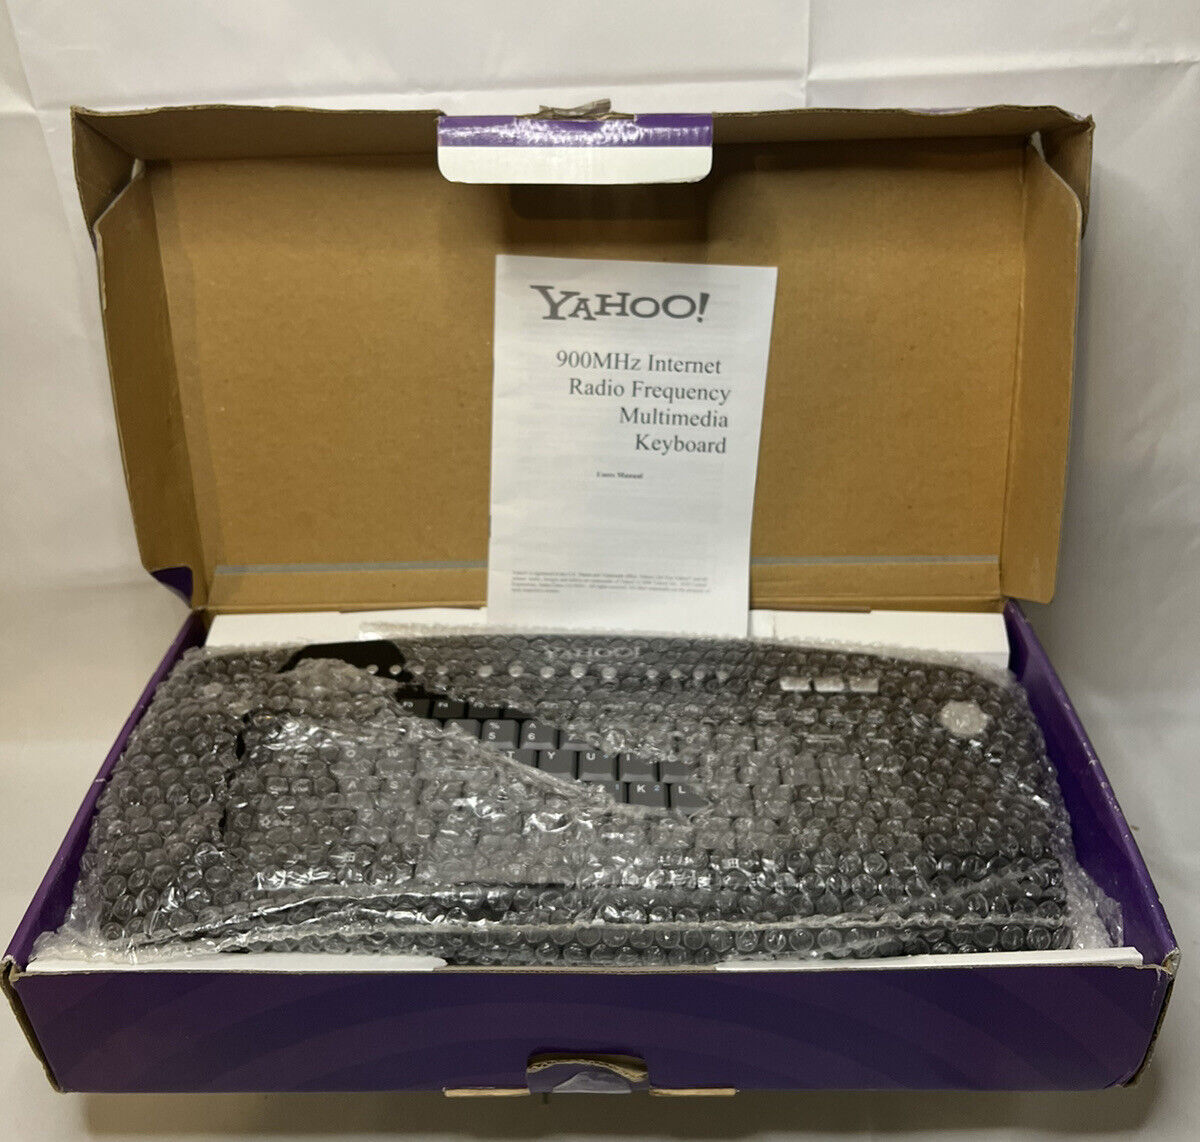 Yahoo Direct Access Internet Keyboard Vintage 1999 New In Original Box